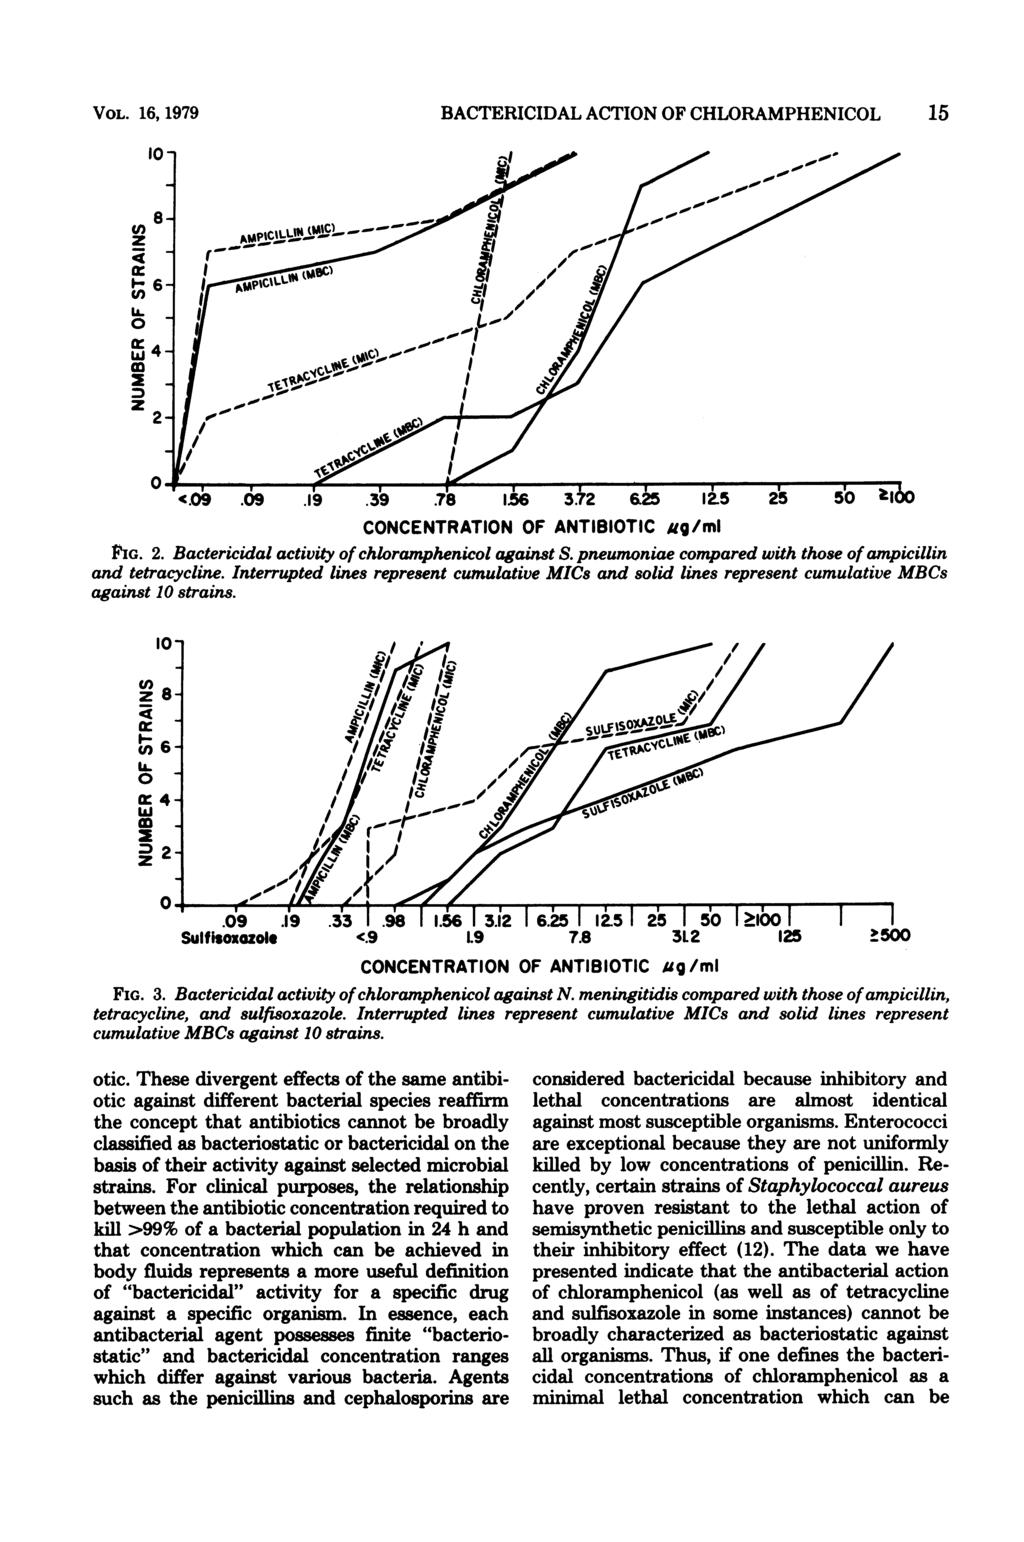 VOL. 16, 1979 BACTERICIDAL ACTION OF CHLORAMPHENICOL 15 (I) z - U) U. co La' 2 CONCENTRATION OF ANTIBIOTIC ug/mi PIG. 2. Bactericidal activity of chloramphenicol against S.